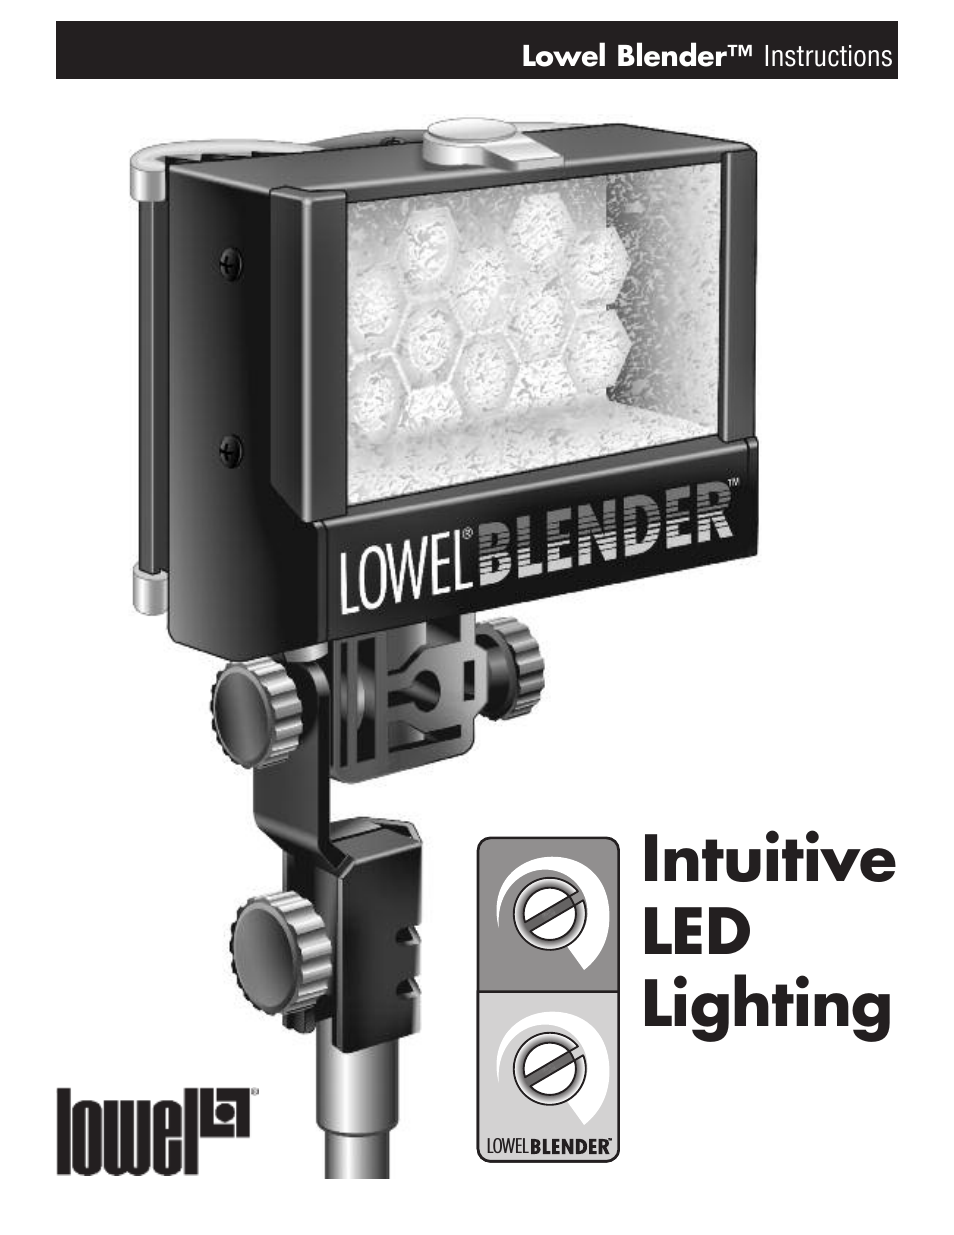 Lowel Blender 2014 Models